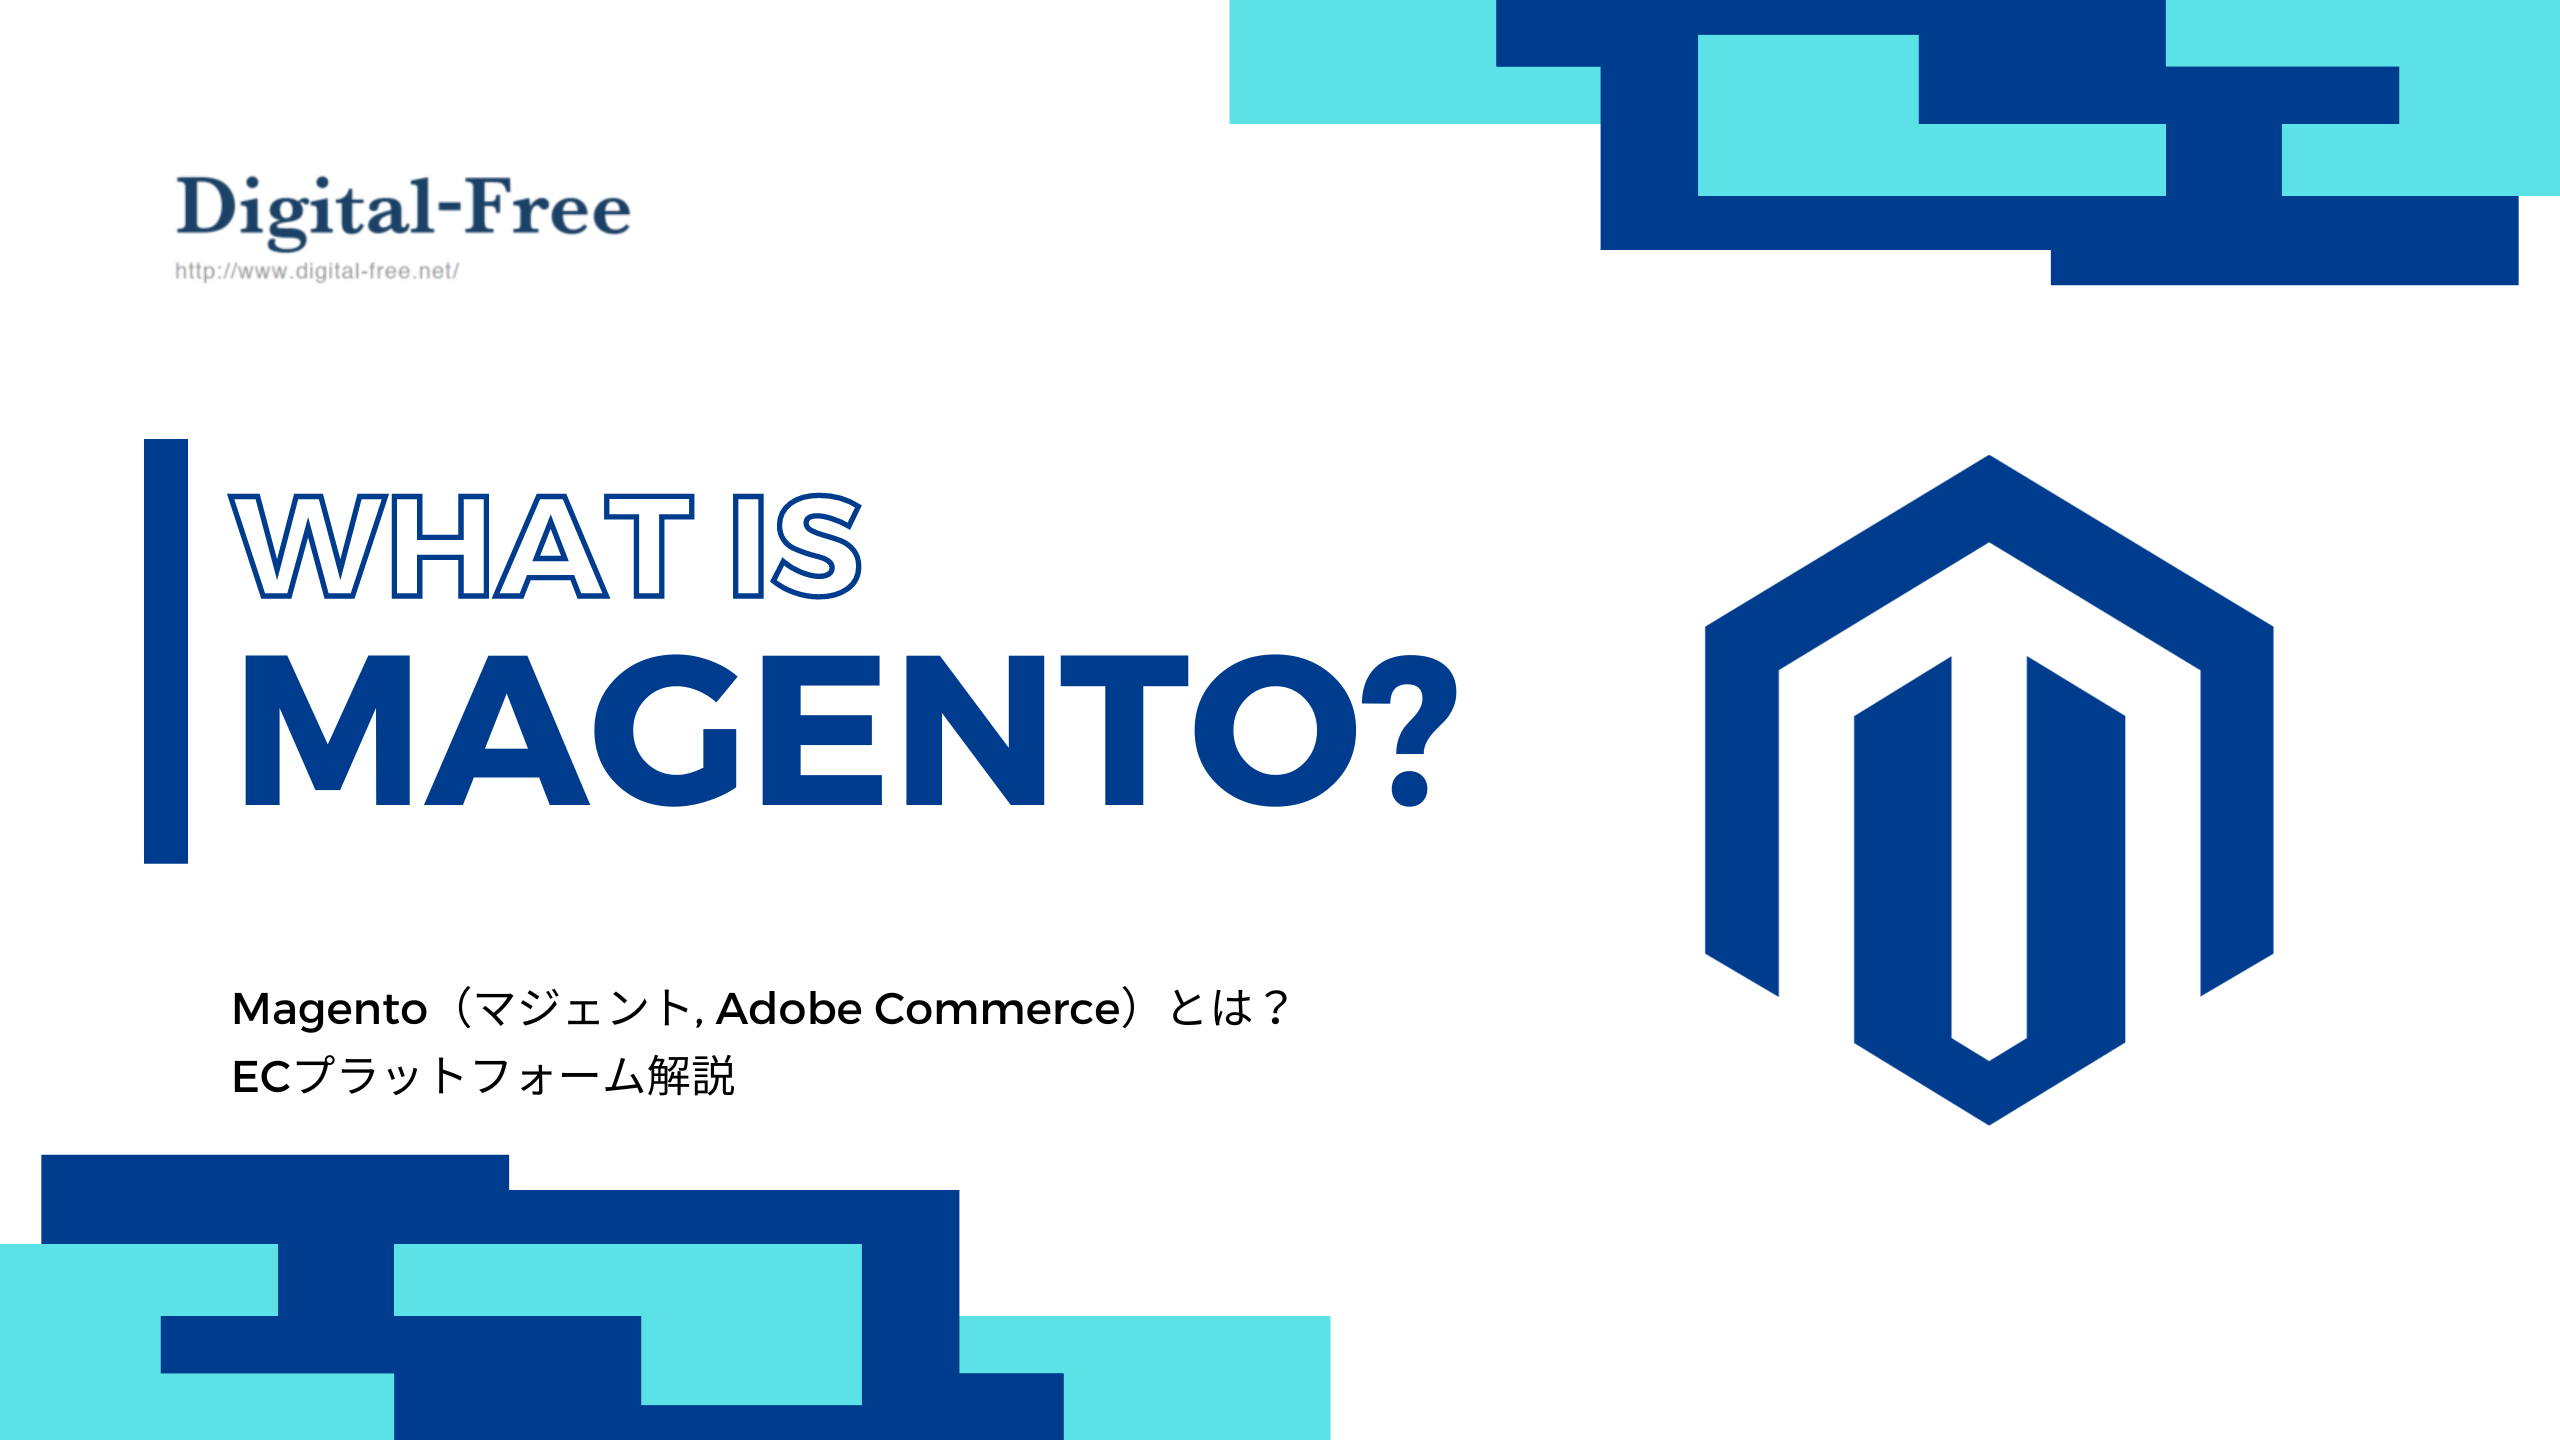 Magento（マジェント, Adobe Commerce）とは？ECプラットフォーム解説